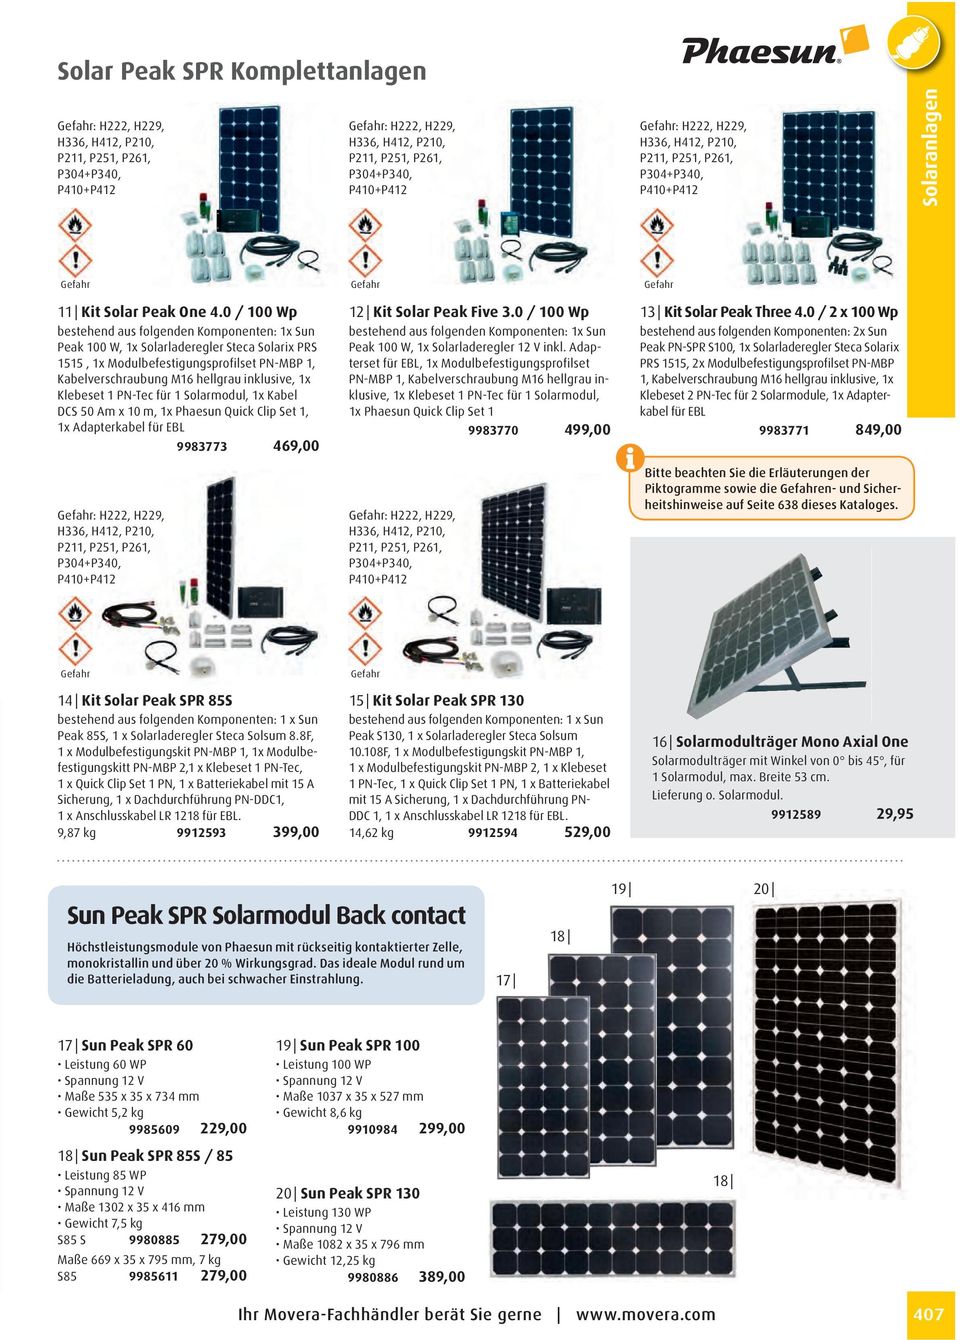 Klebeset 1 PN-Tec für 1 Solarmodul, 1x Kabel DCS 50 Am x 10 m, 1x Phaesun Quick Clip Set 1, 1x Adapterkabel für EBL 9983773 469,00 12 Kit Solar Peak Five 3.